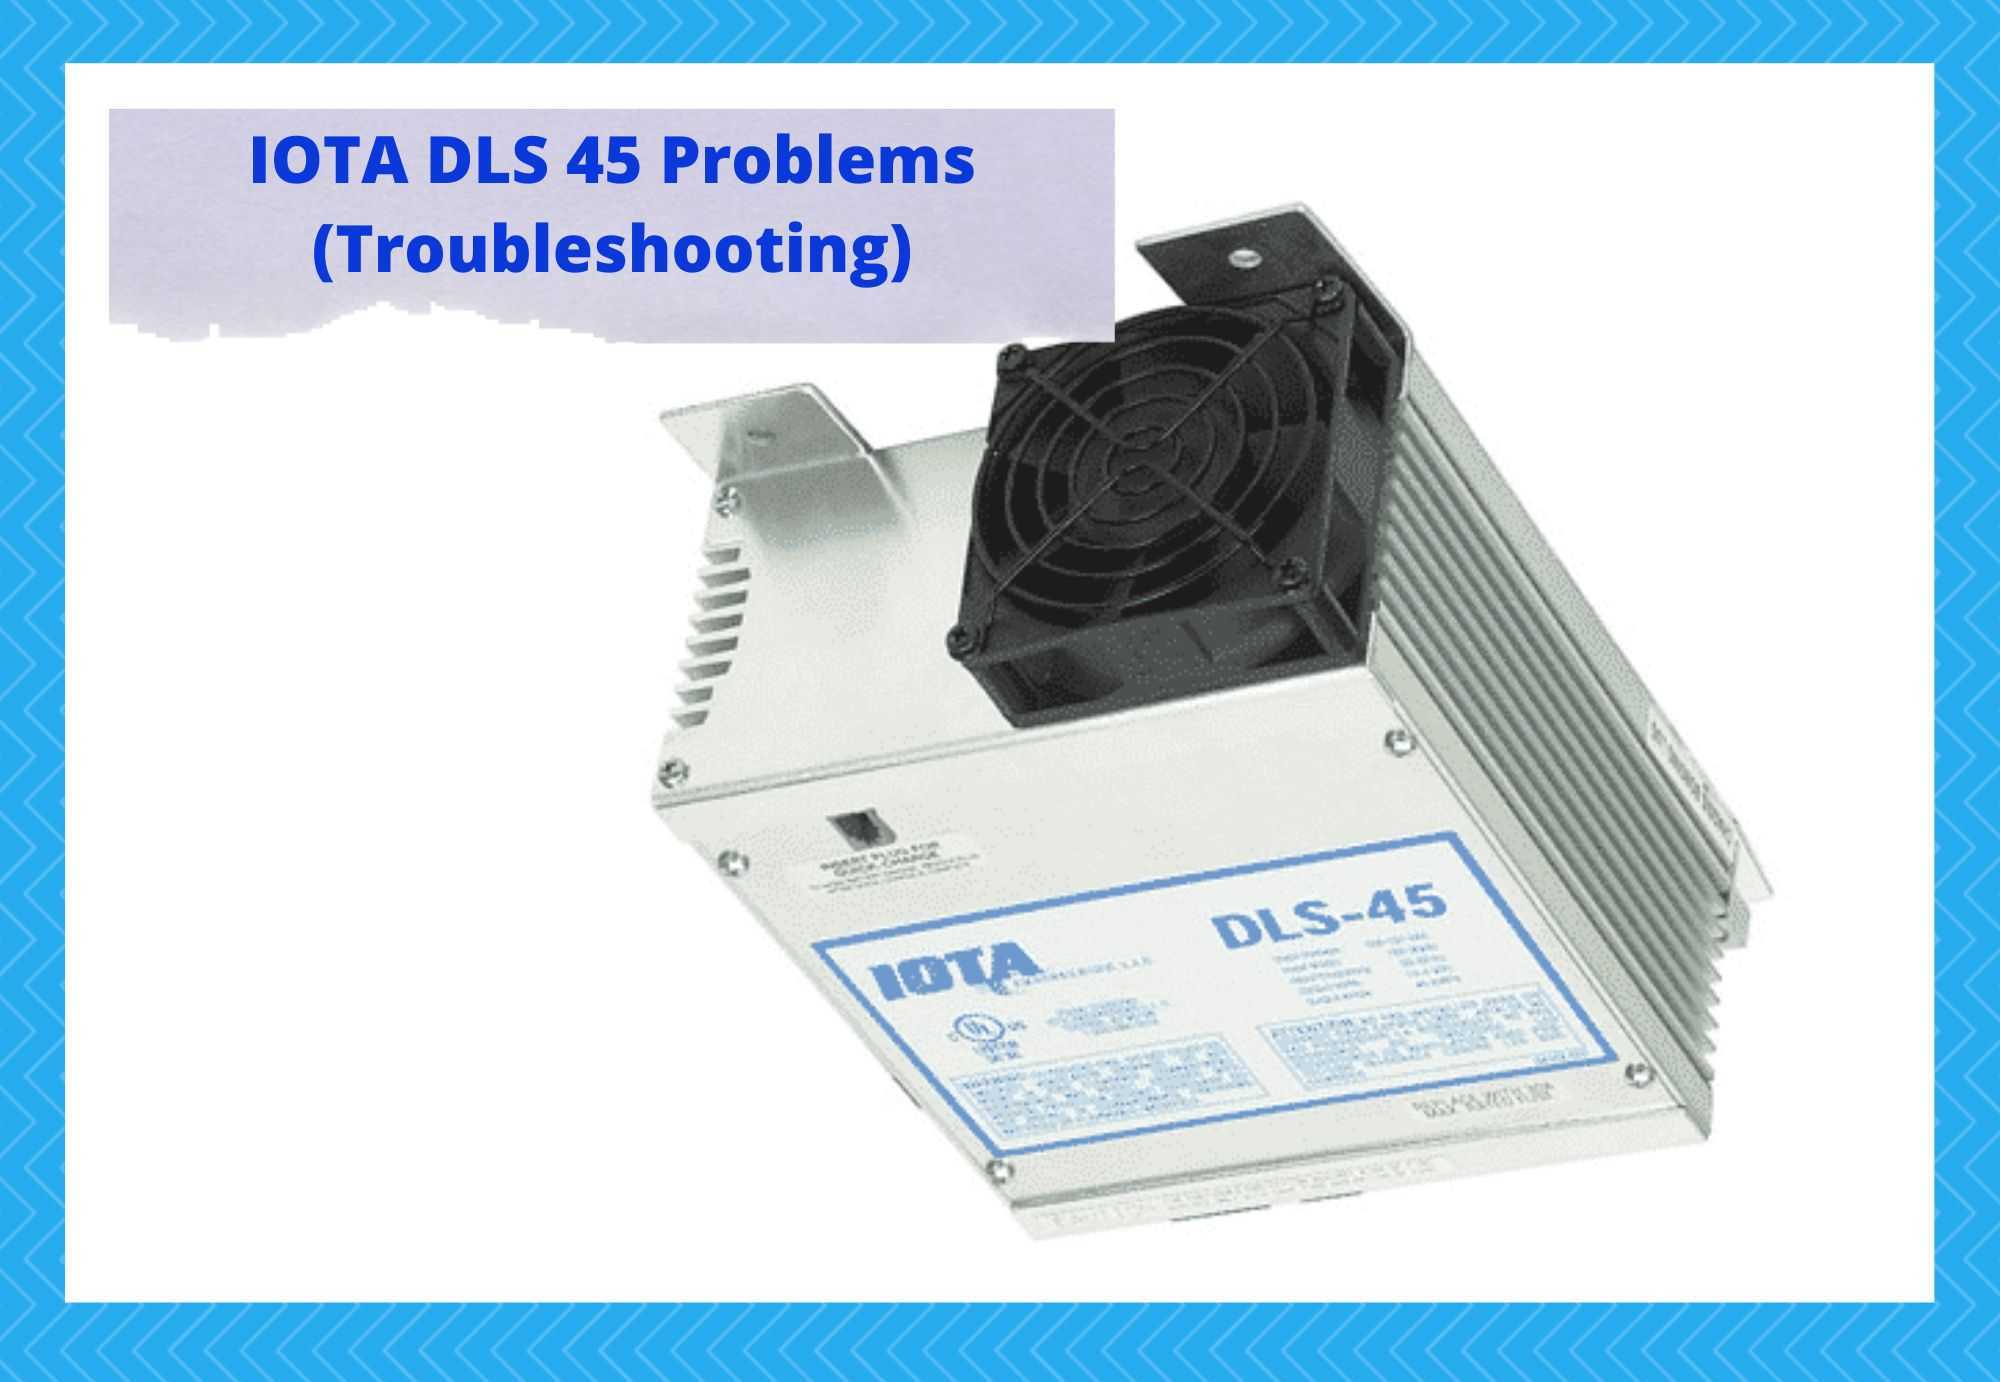 IOTA DLS 45 Troubleshooting